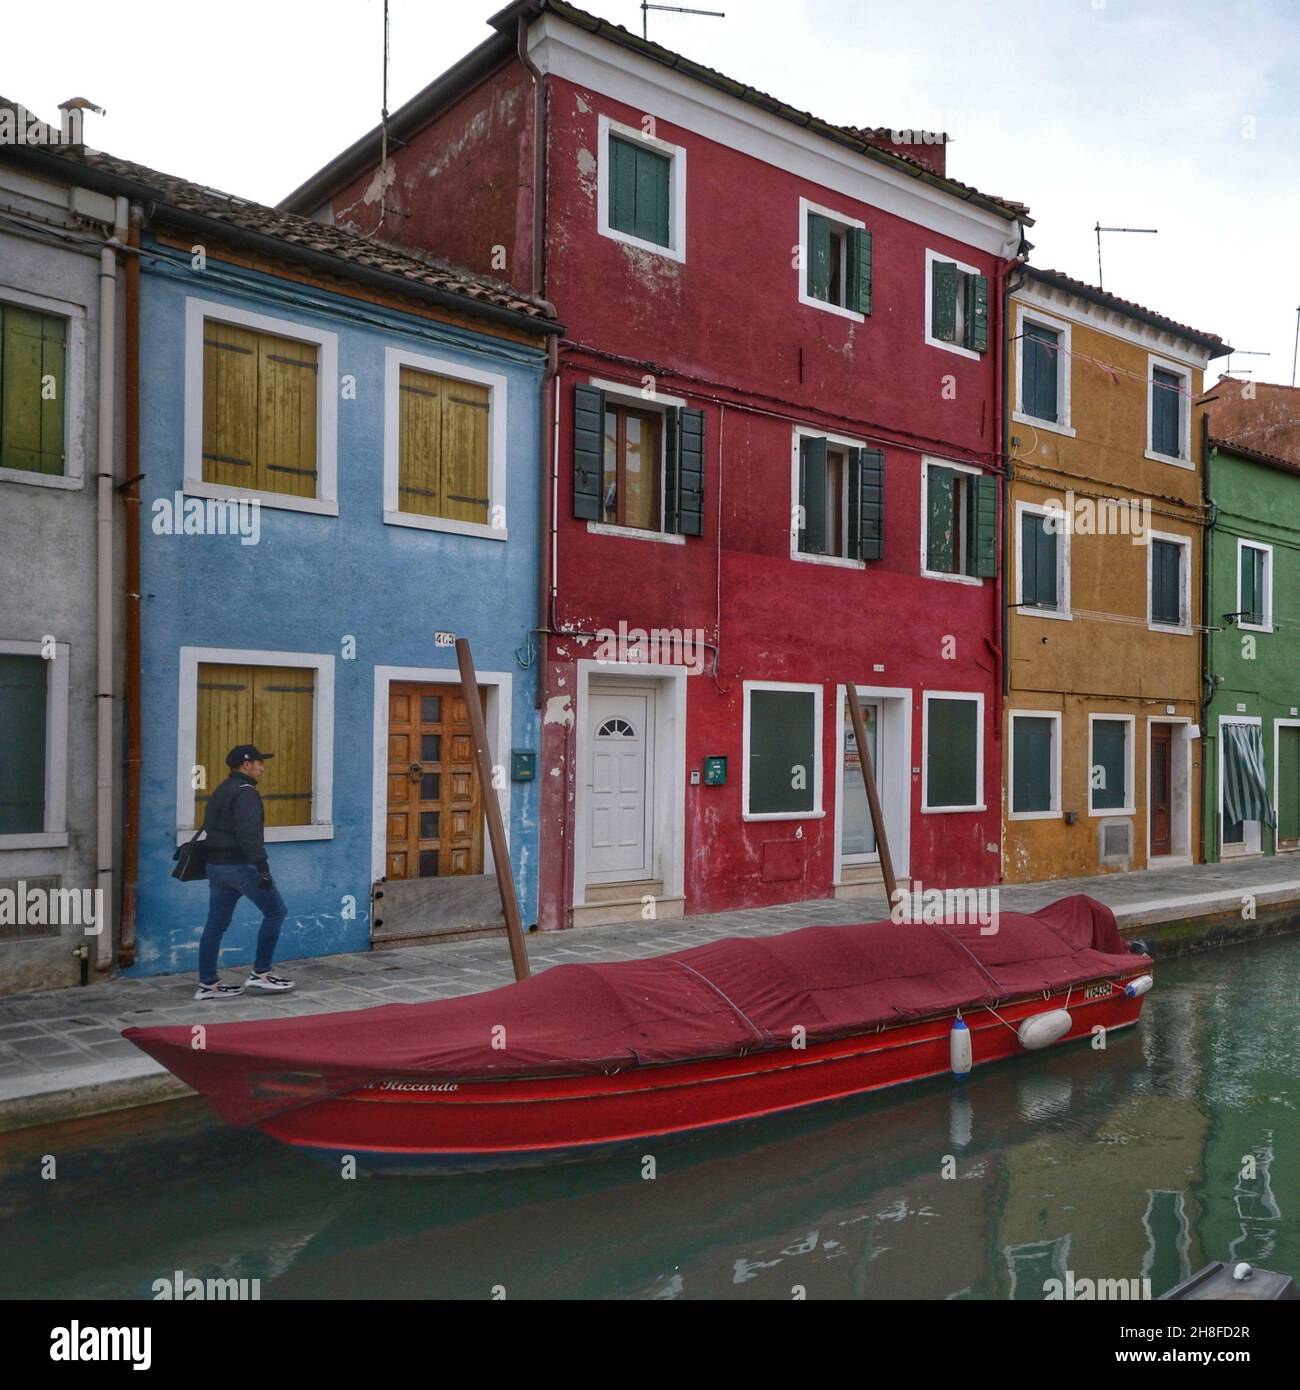 Venice, Burano island canal Stock Photo